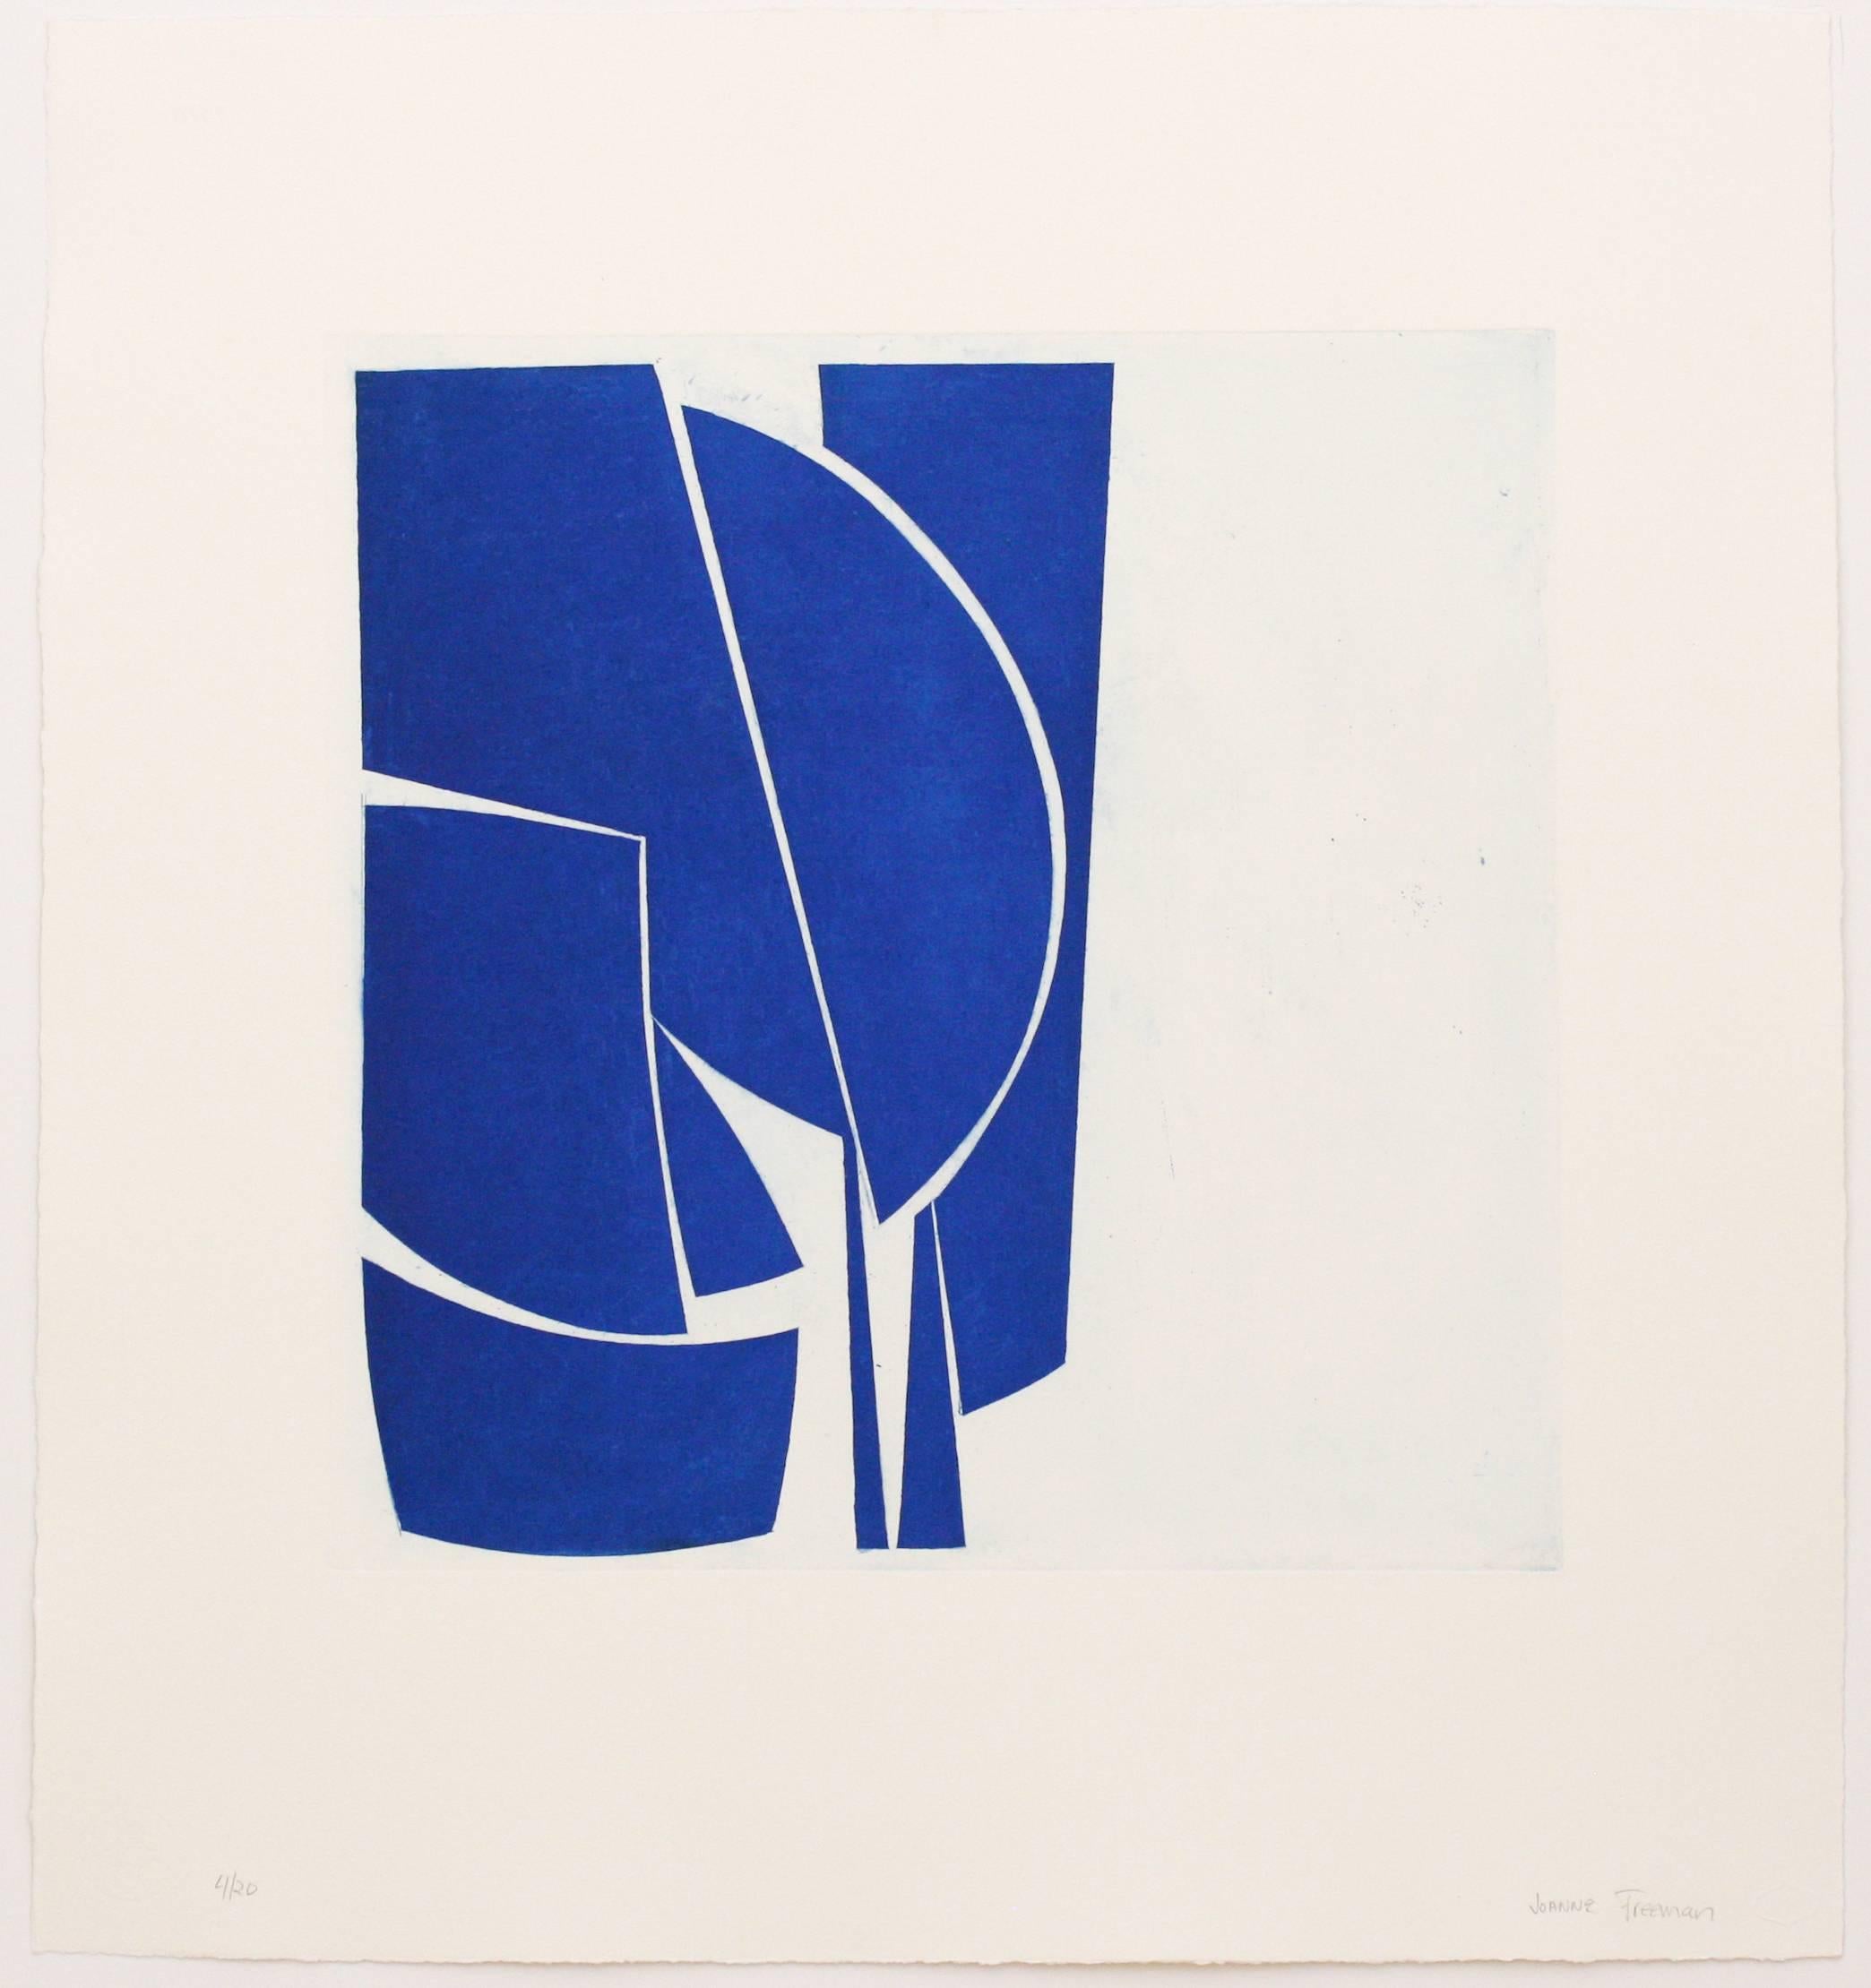 Joanne Freeman Abstract Print - Covers 1 Cobalt, abstract aquatint print, mid-century modern influenced, blue.